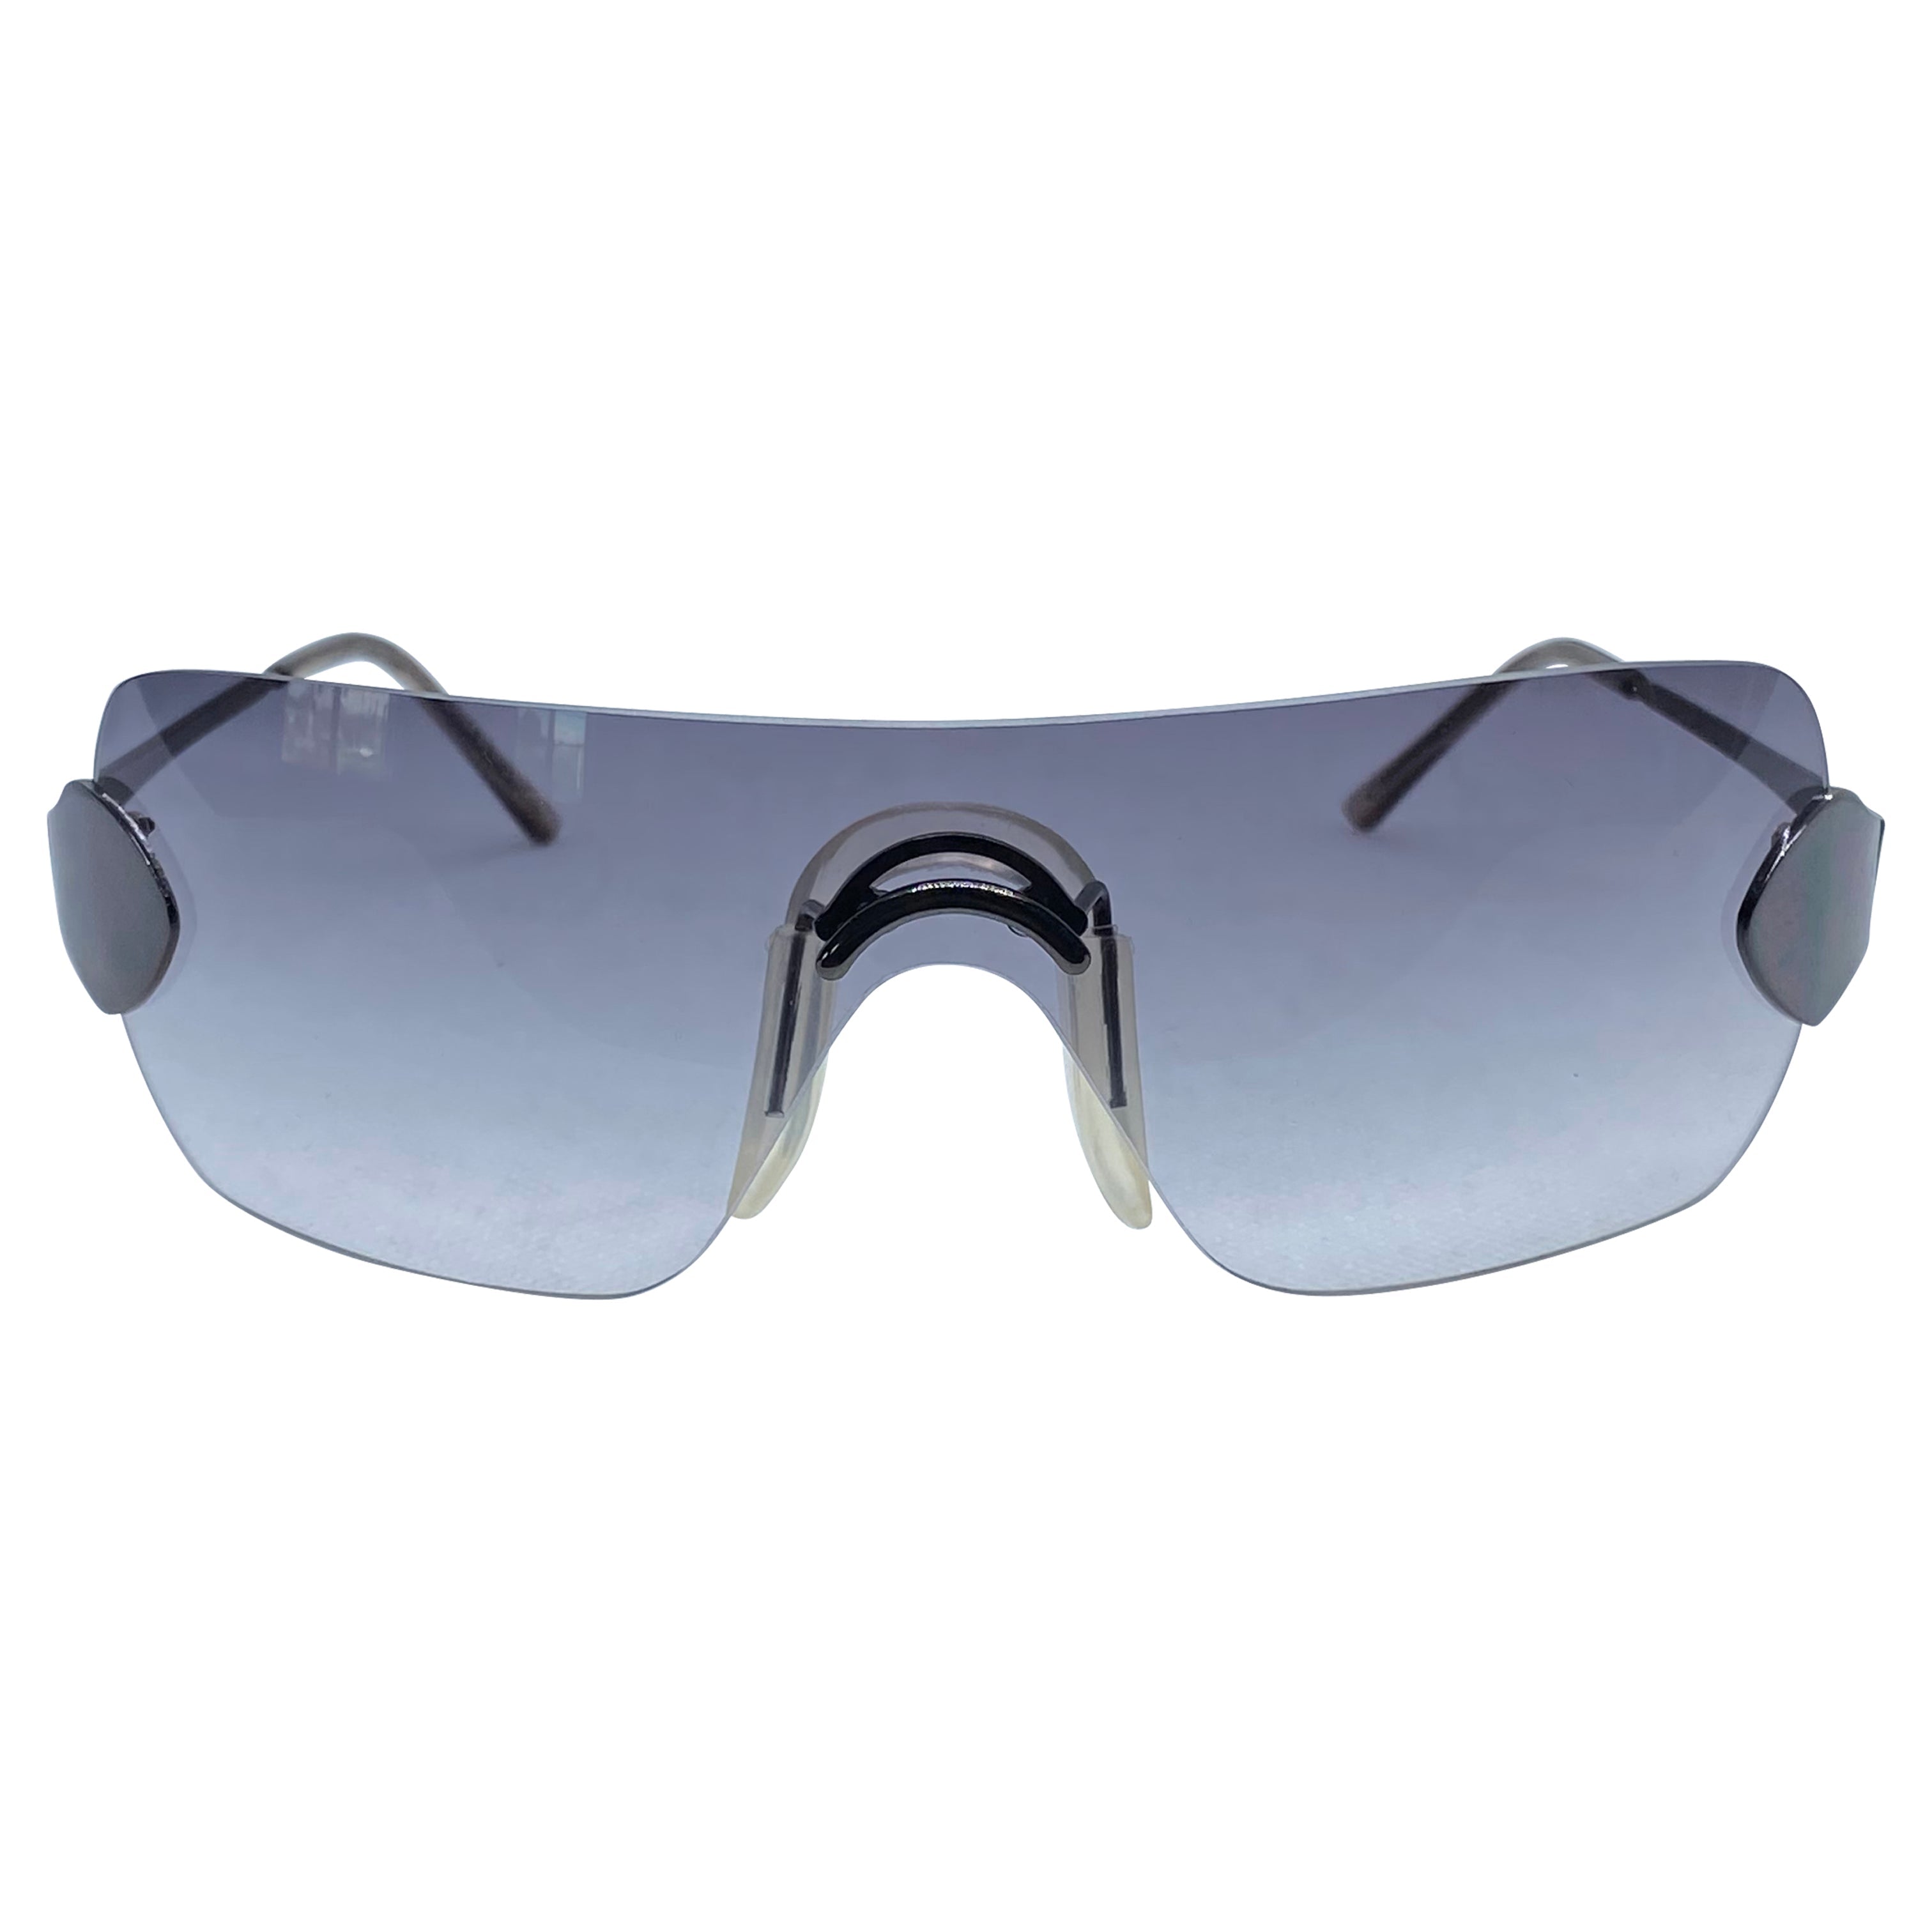 GIANT | Vintage Sunglasses: Mens, Square, Oval, Shield